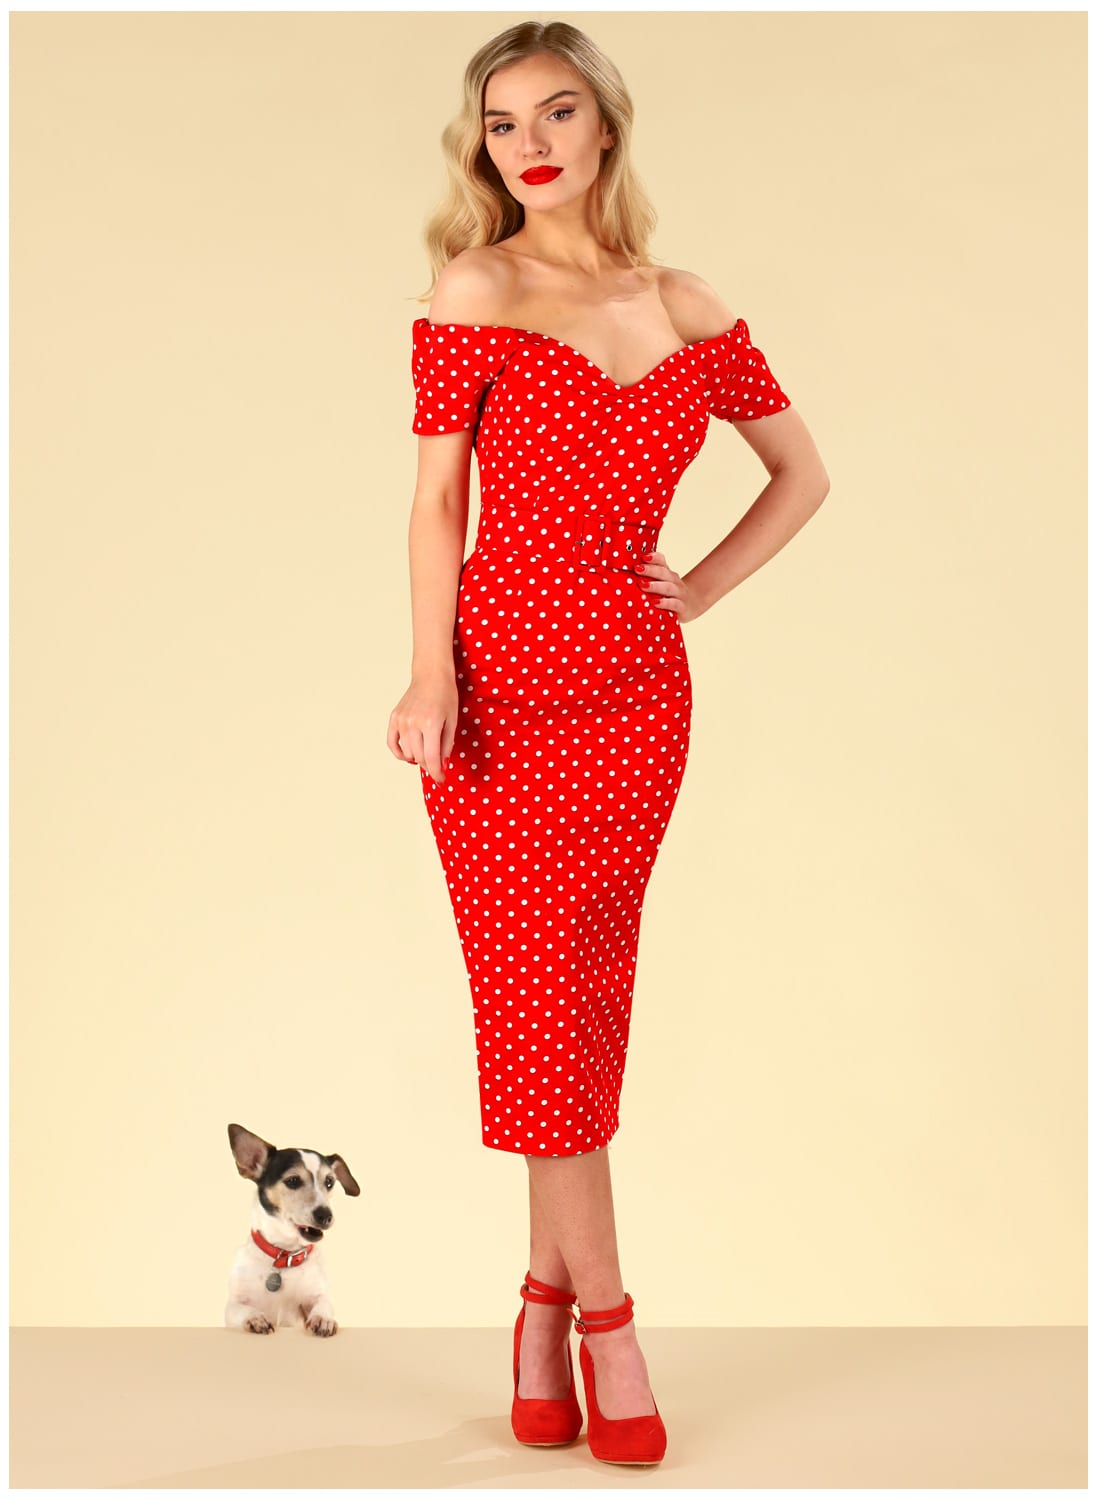 50s red polka dot dress